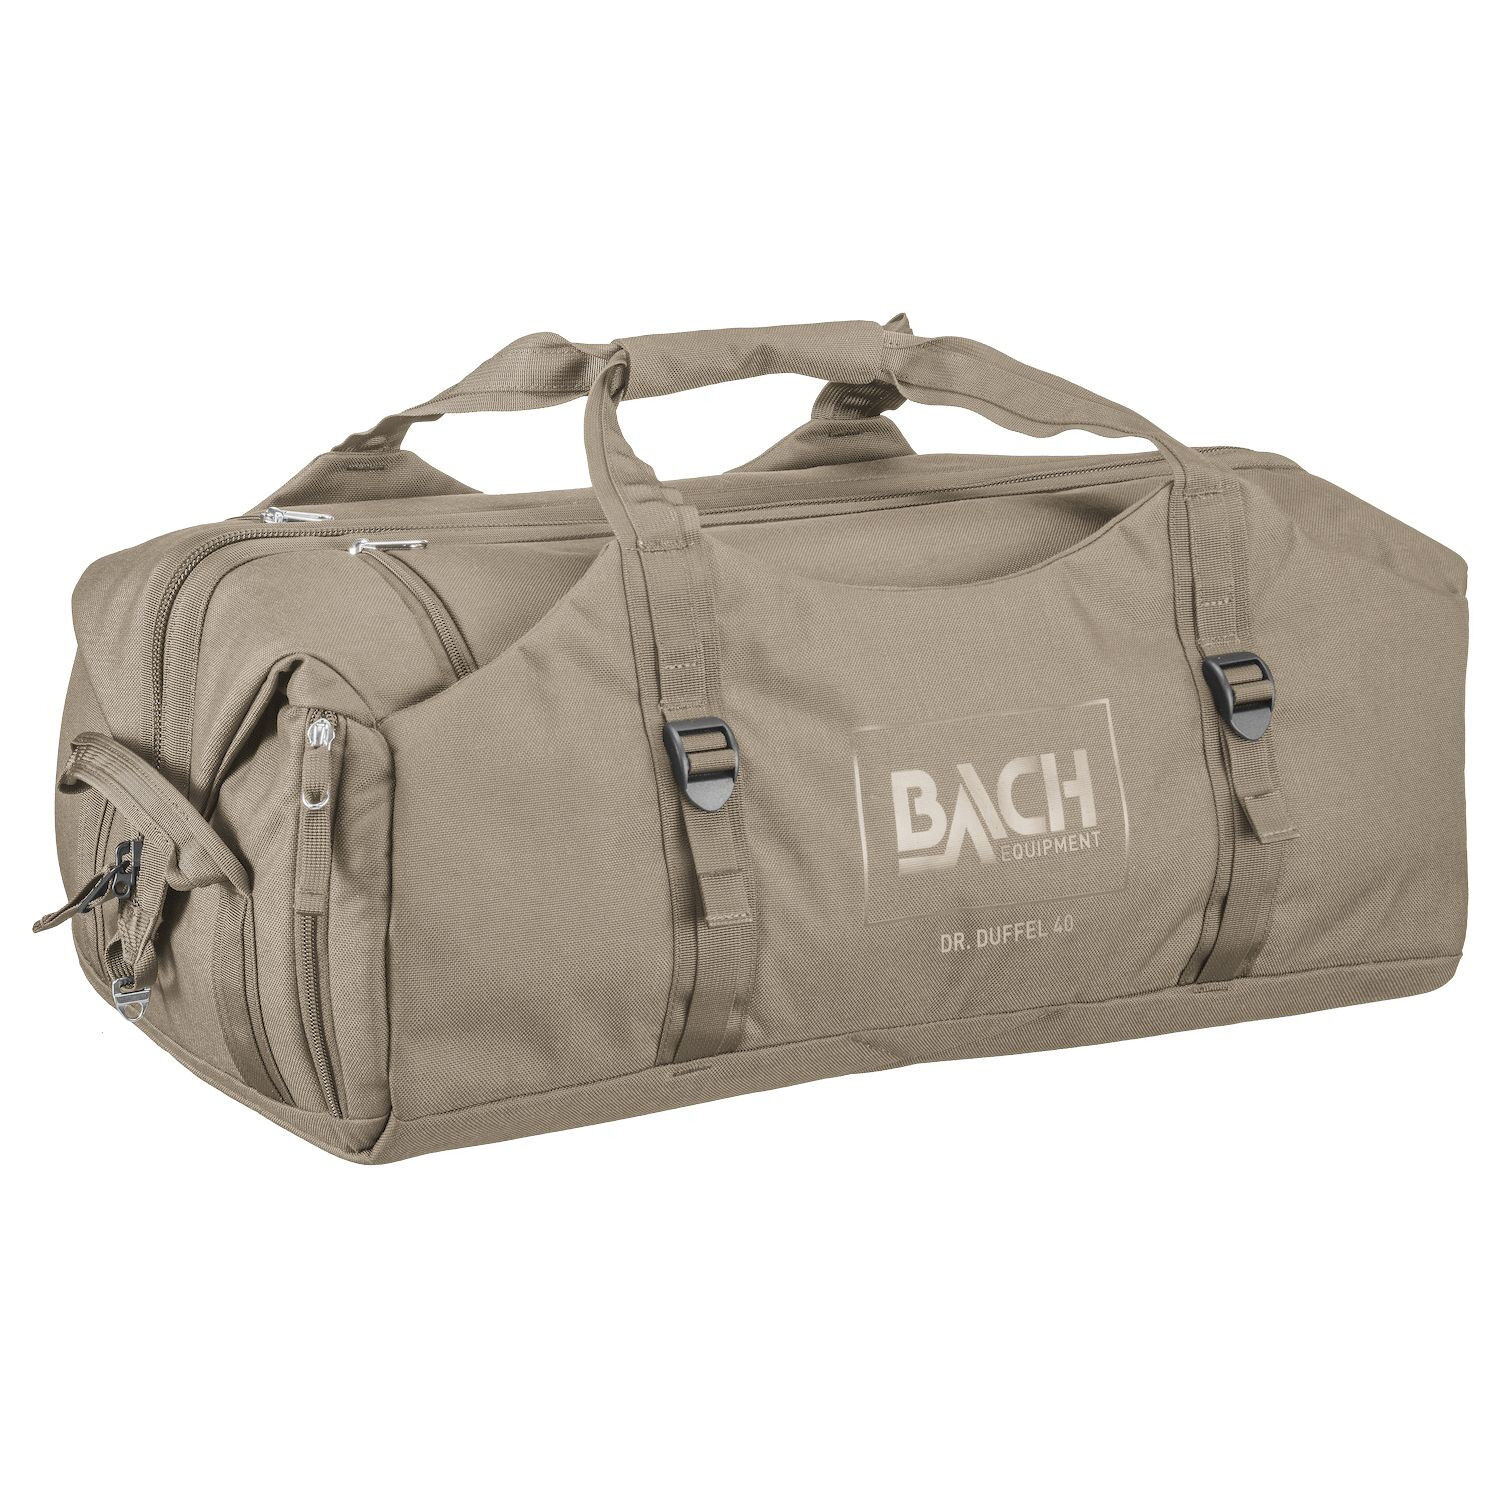 Bach Dr. Duffel 40 - Cestovní kufry | Hardloop